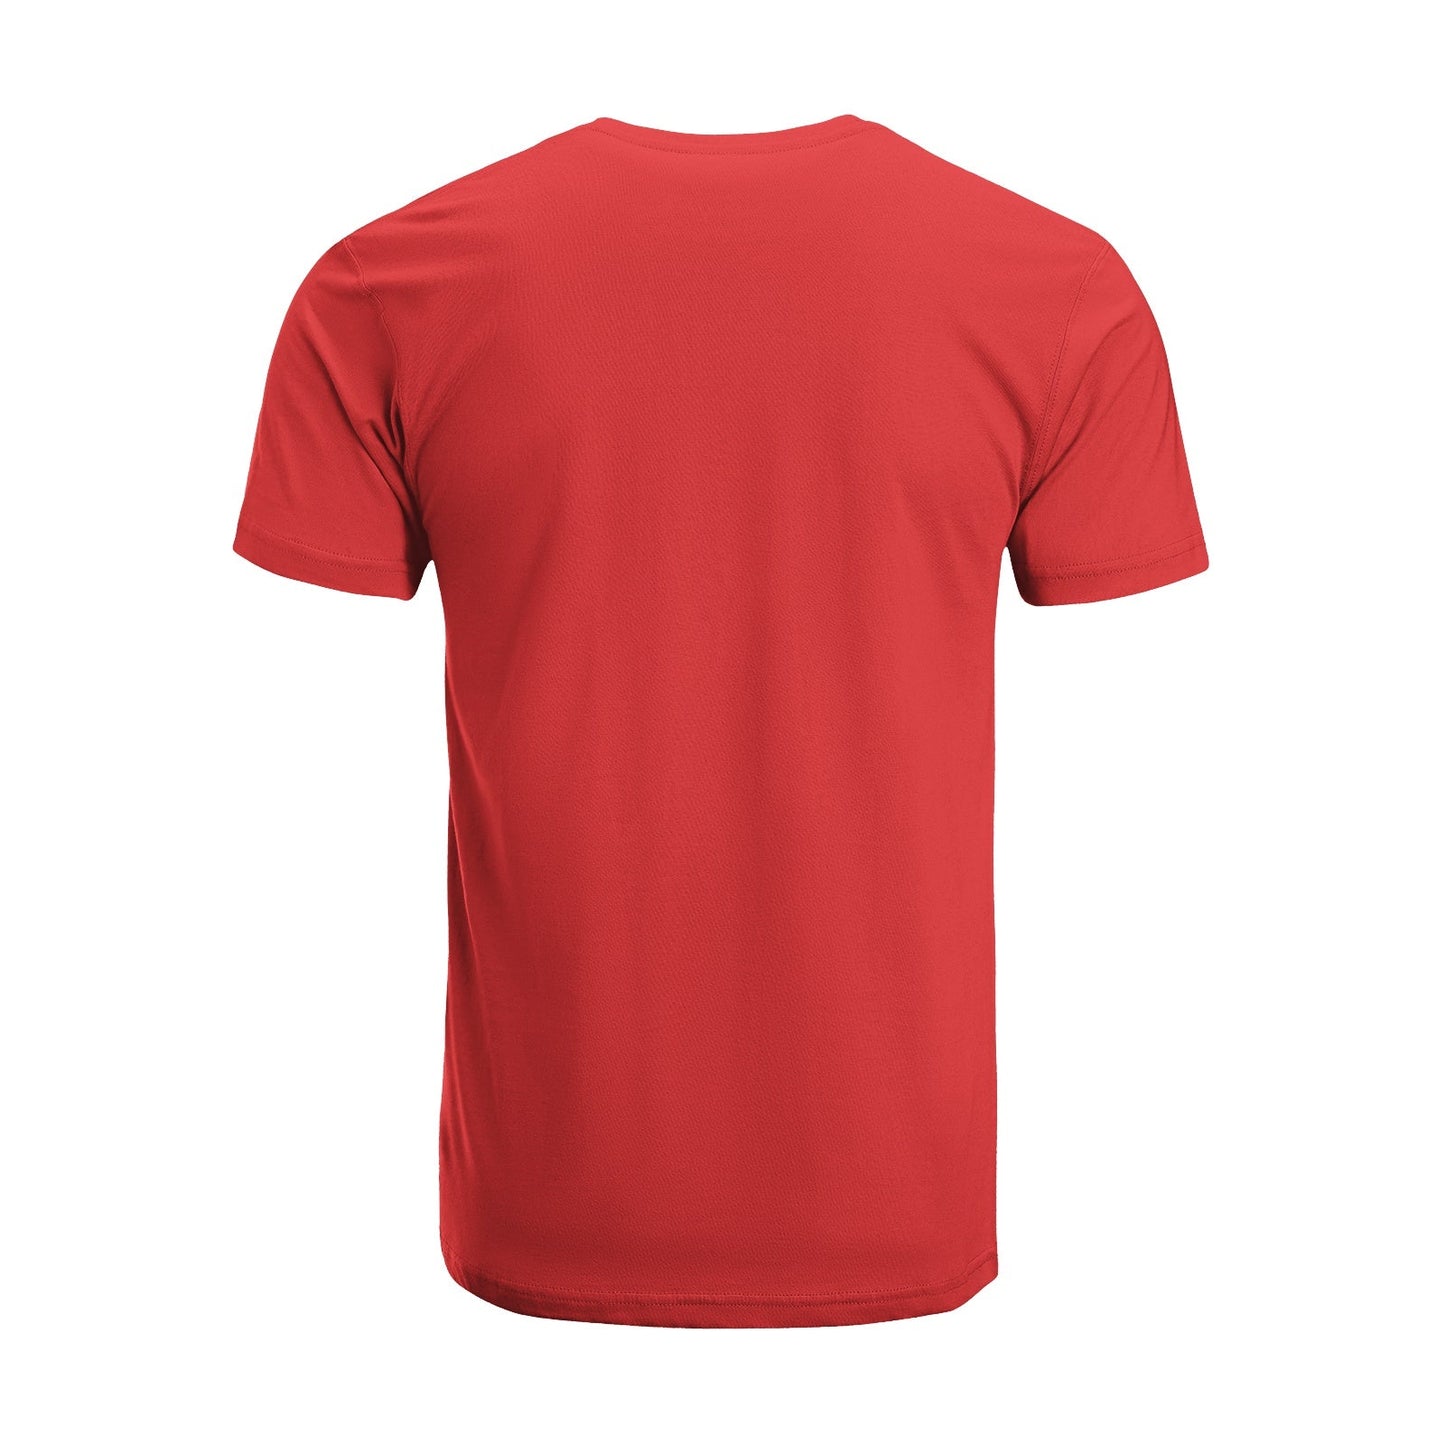 Unisex Short Sleeve Crew Neck Cotton Jersey T-Shirt MOM 43